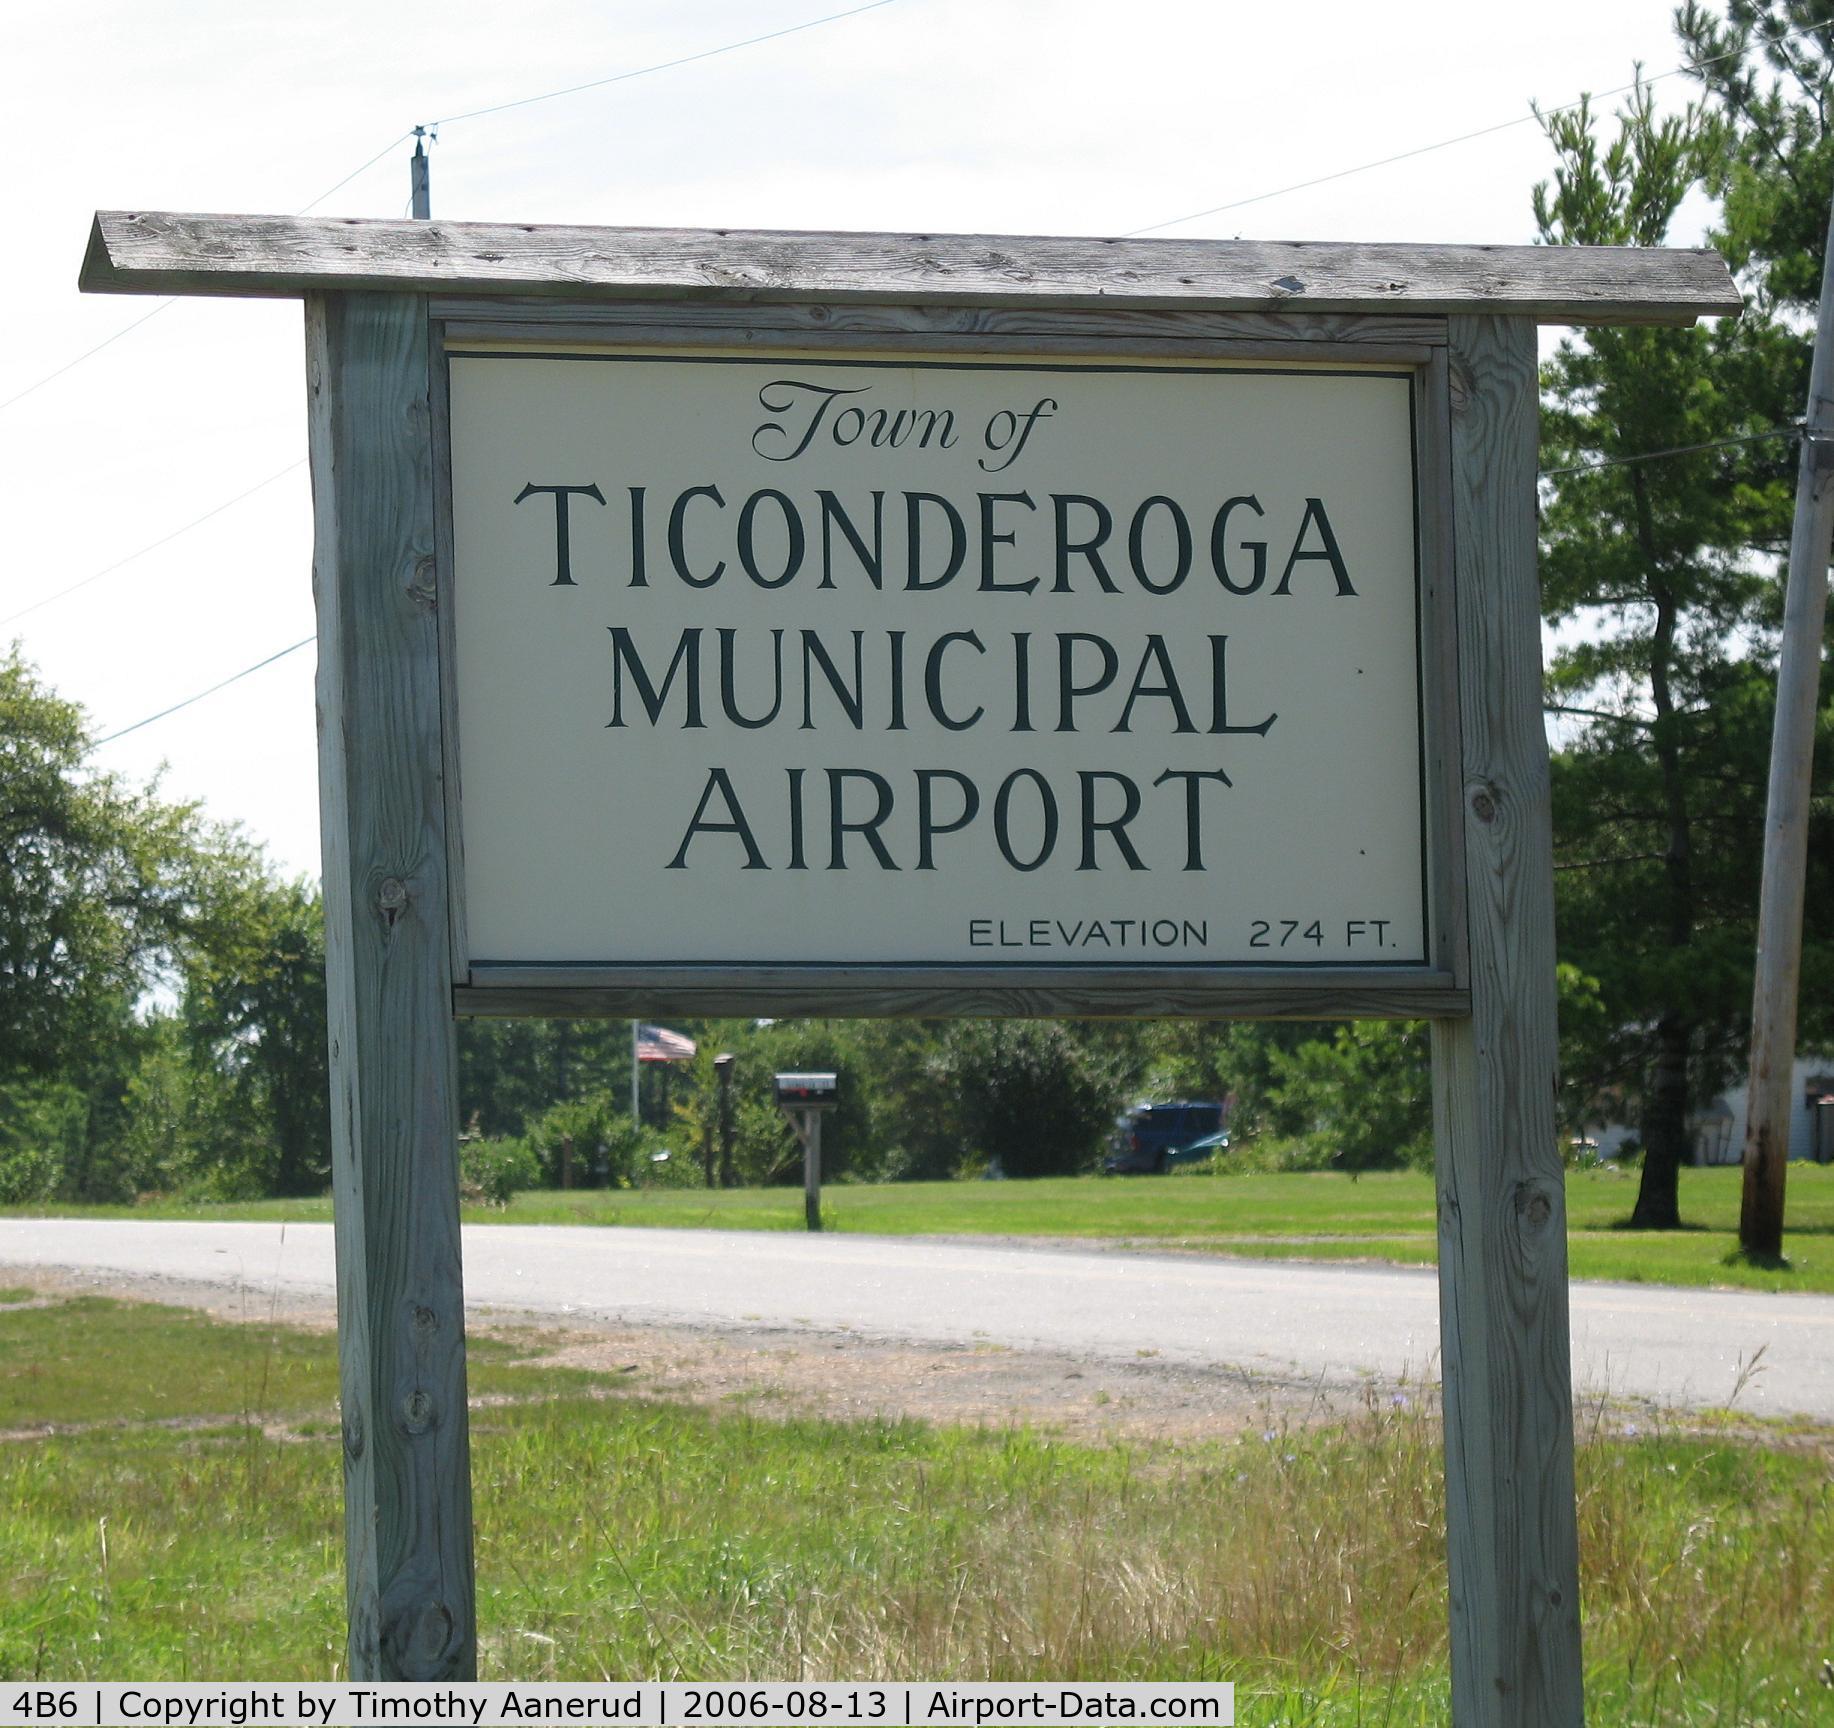 Ticonderoga Municipal Airport (4B6) - airport entrance sign